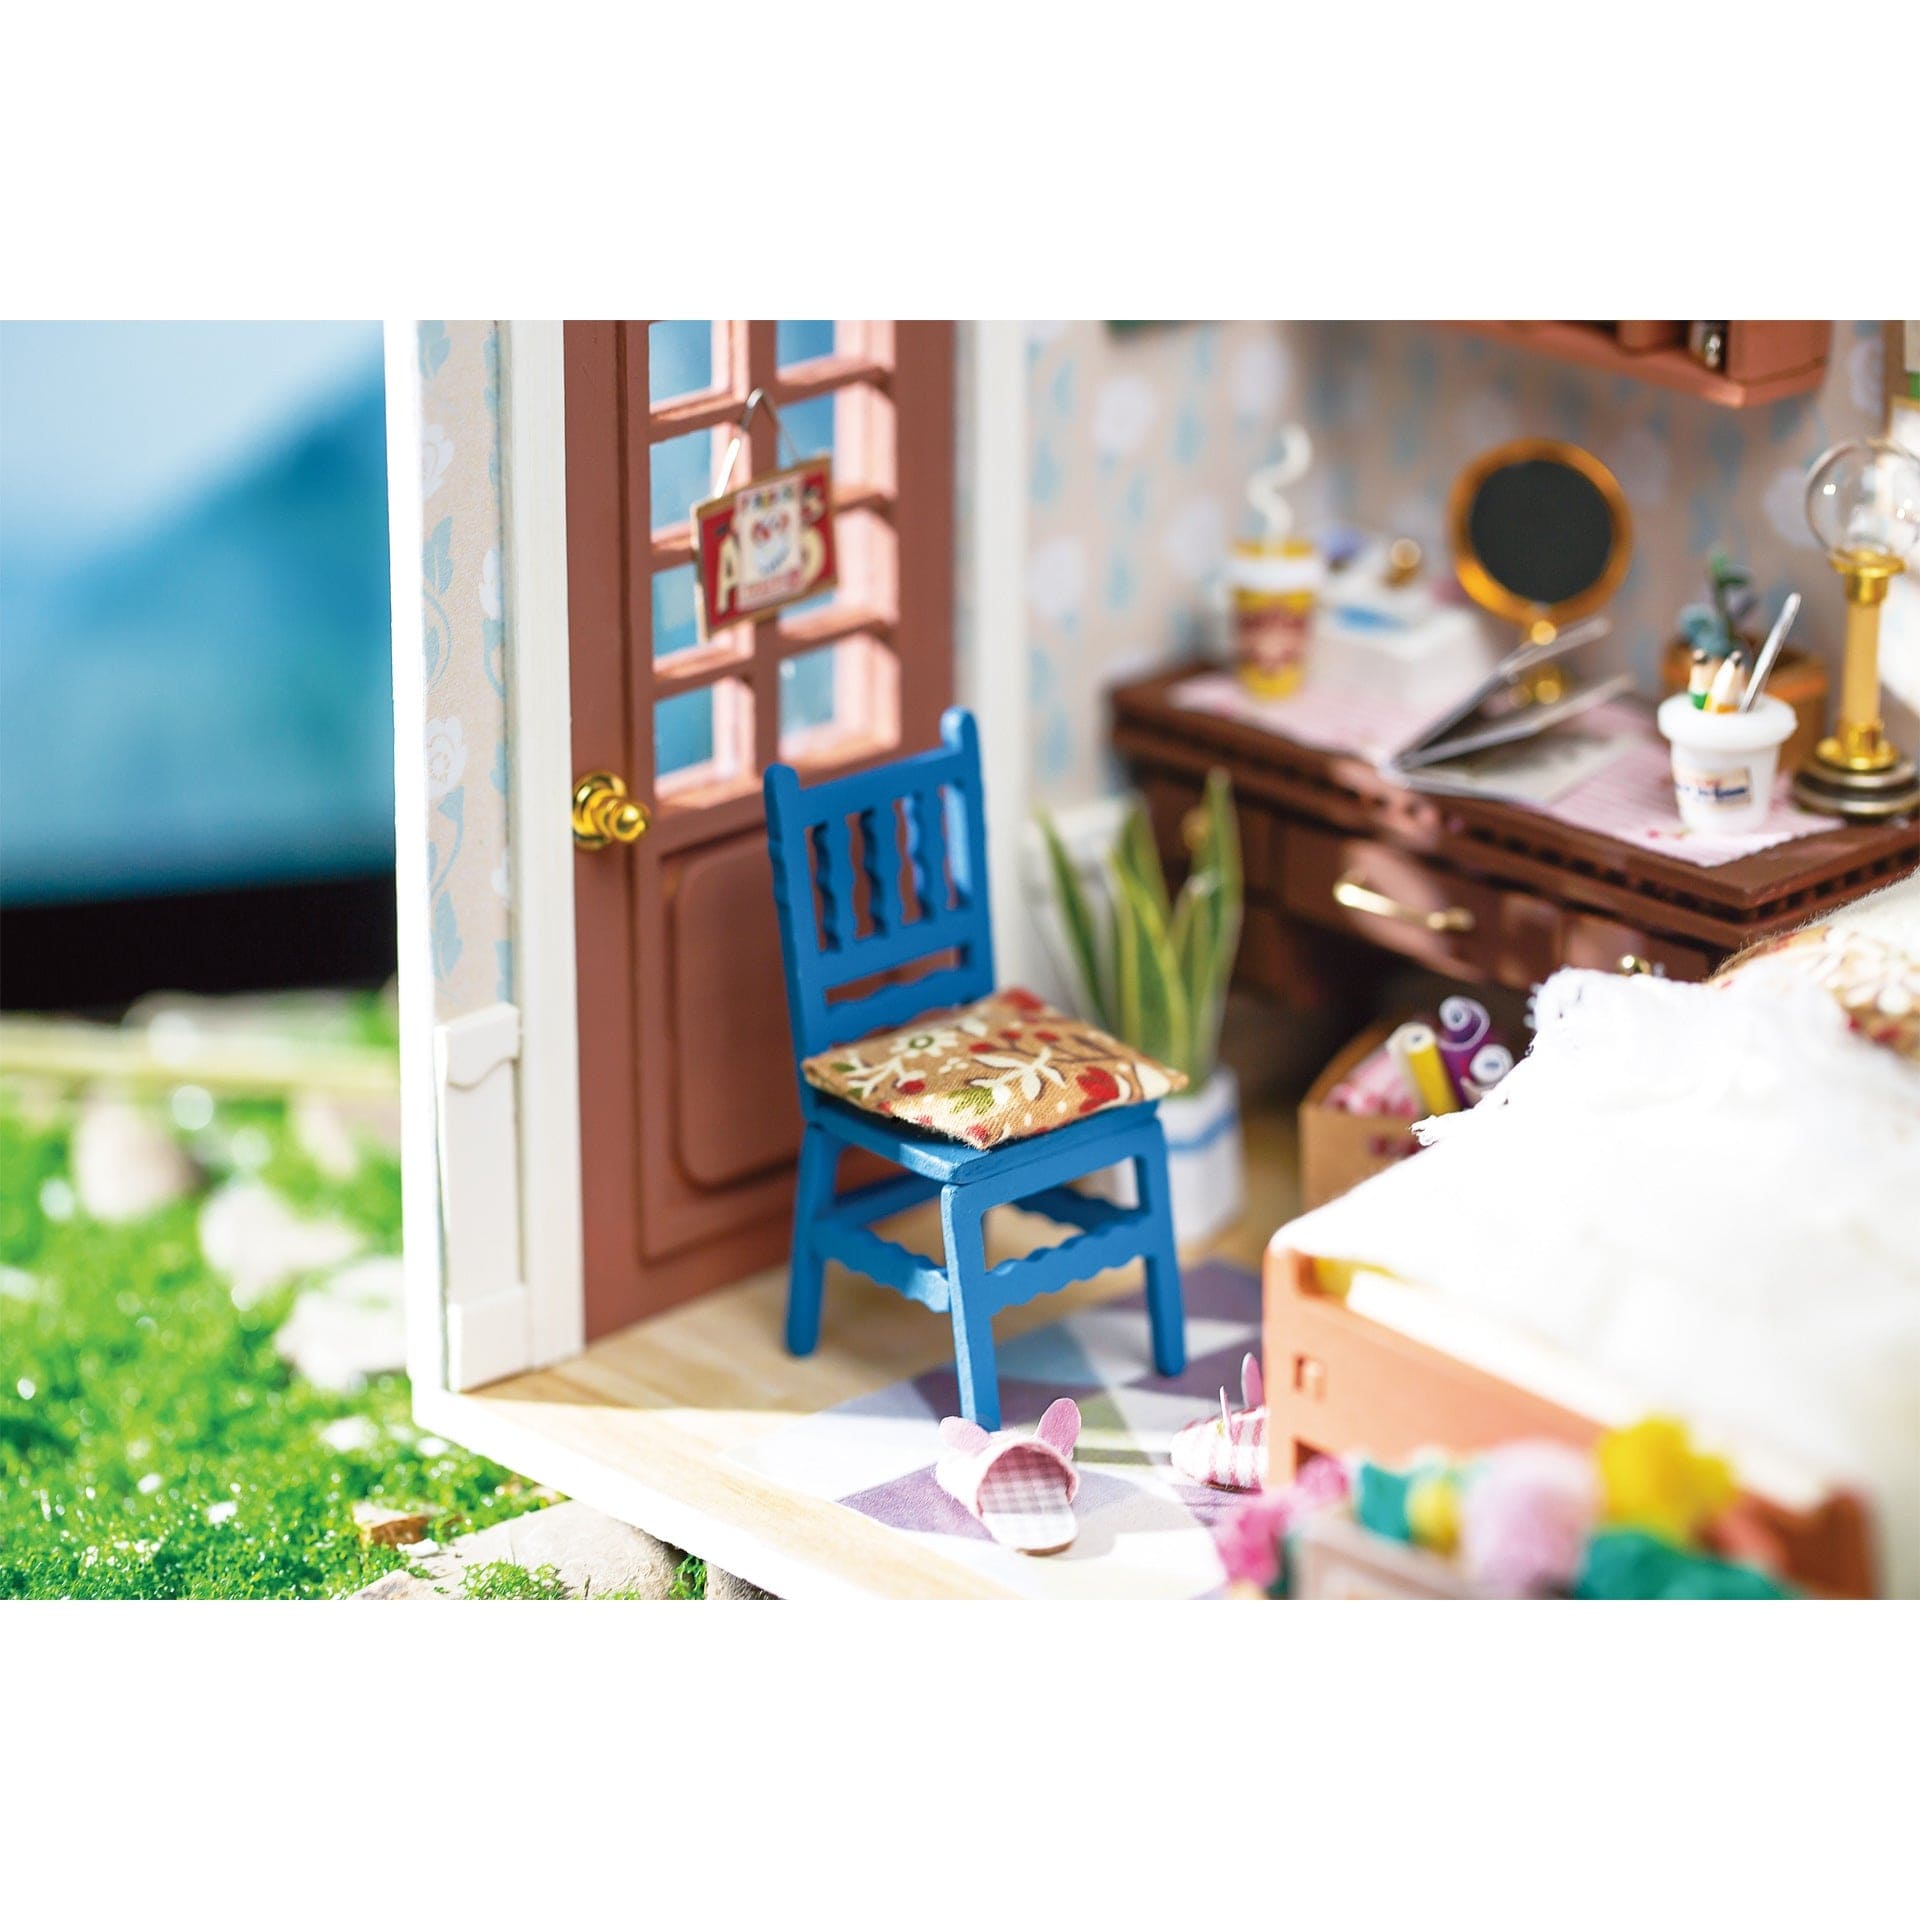 Hands Craft Charlie's Dining Room, DIY Miniature Dollhouse Kit Kawaii Gifts 850005994770